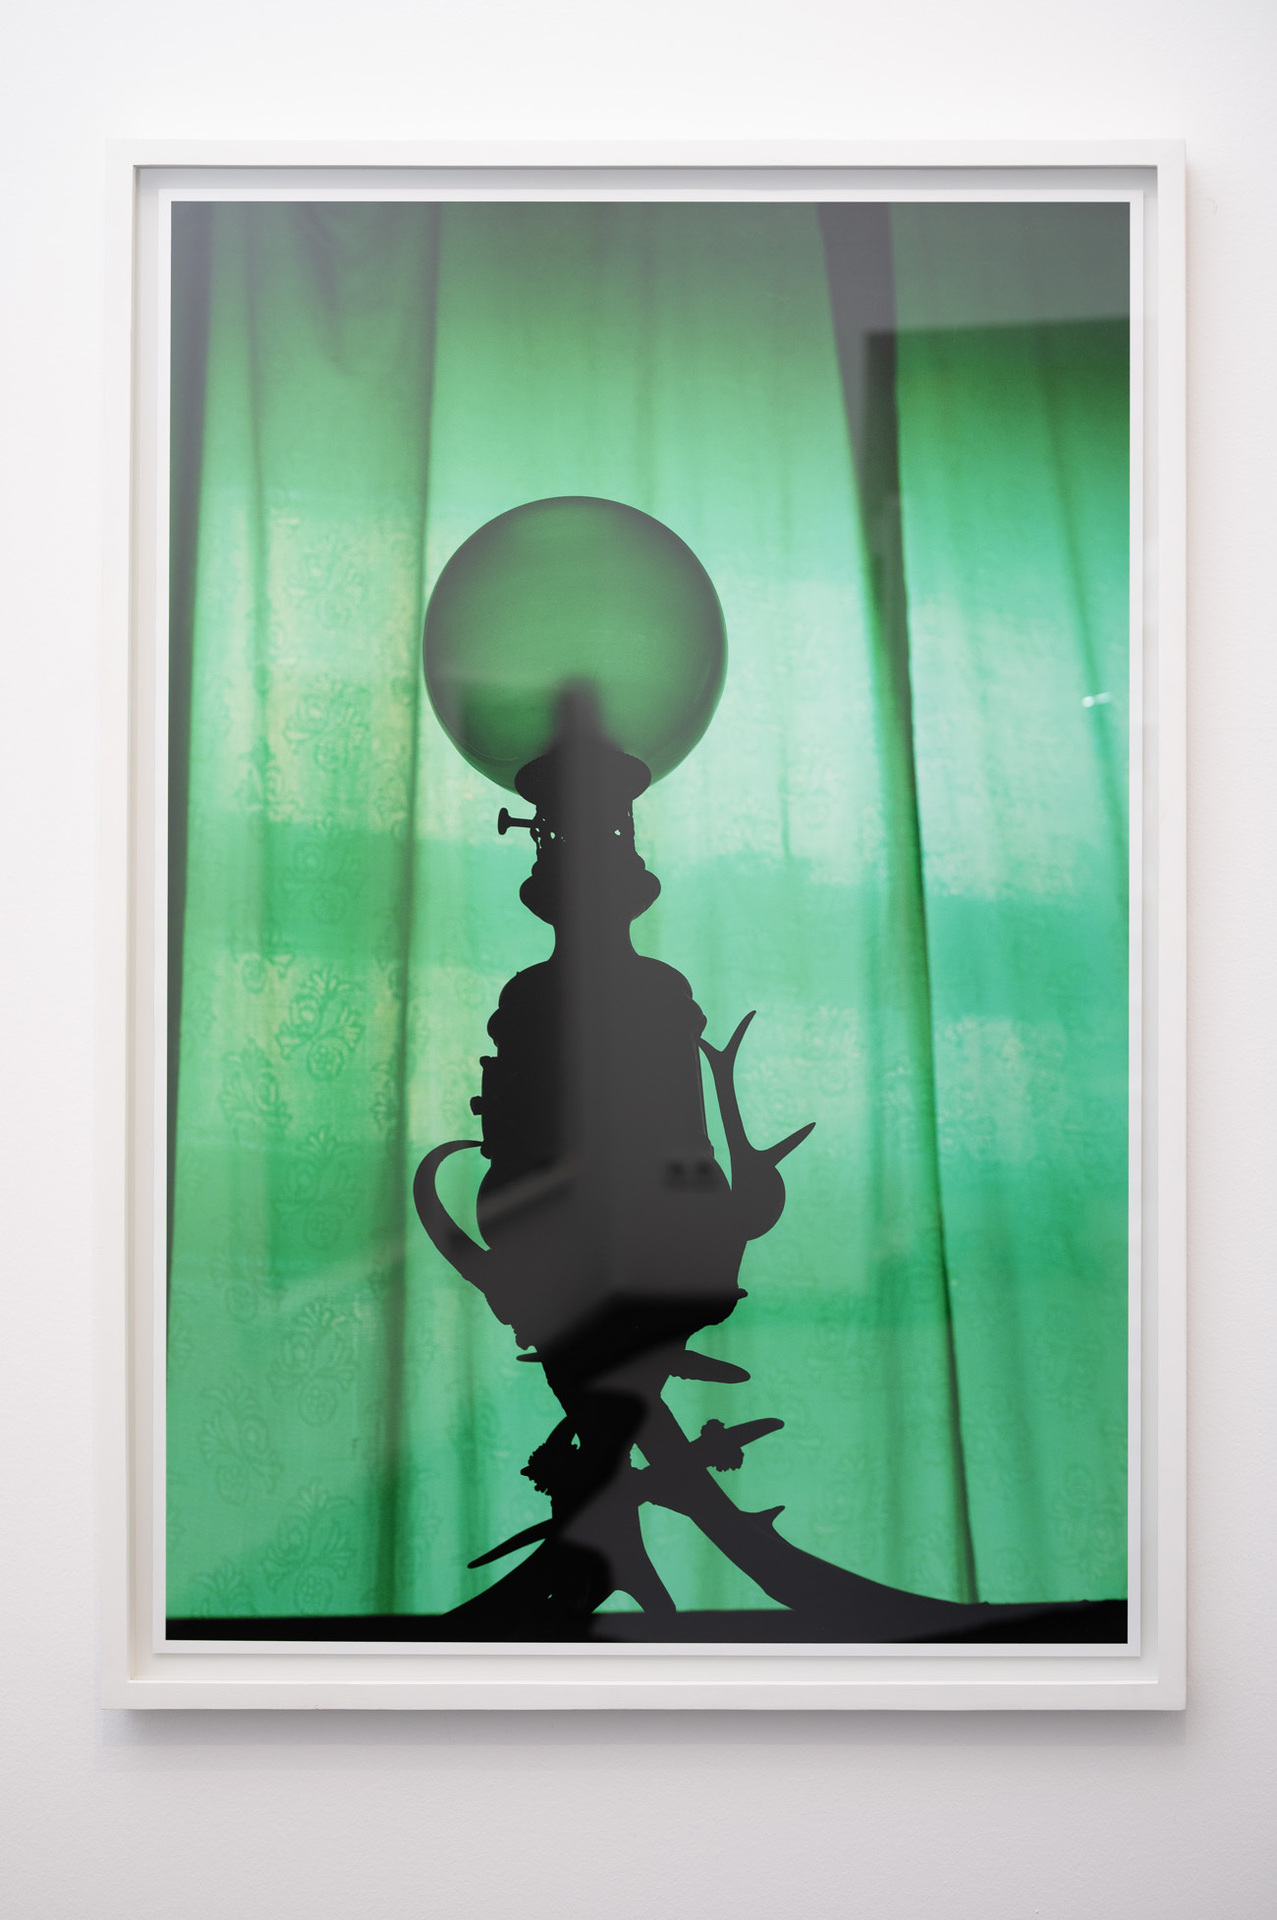 Nestan Abdushelishvili, Untitled (Green), C - print, 116 x 82cm, 2021